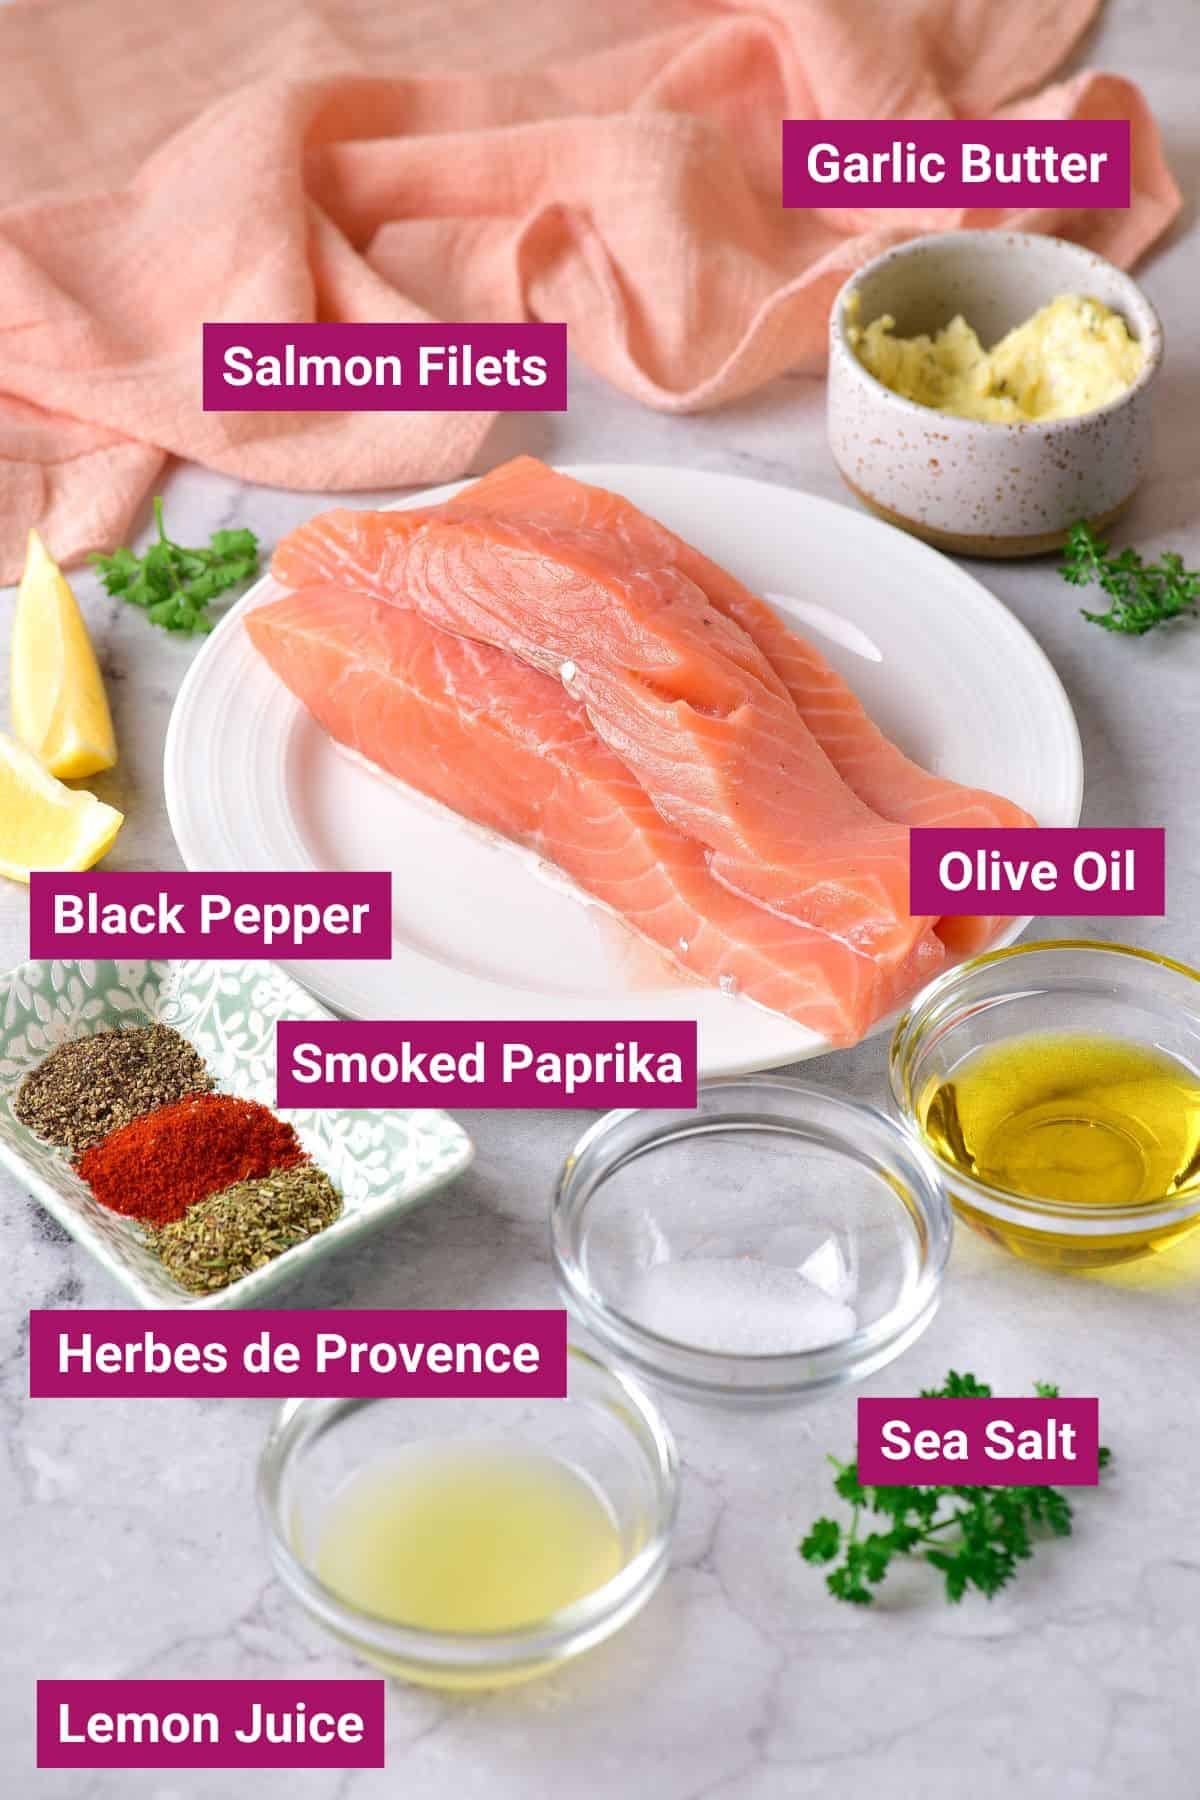 salmon filets, garlic butter, spices, olive oil, salt and lemon juice in separate bowls